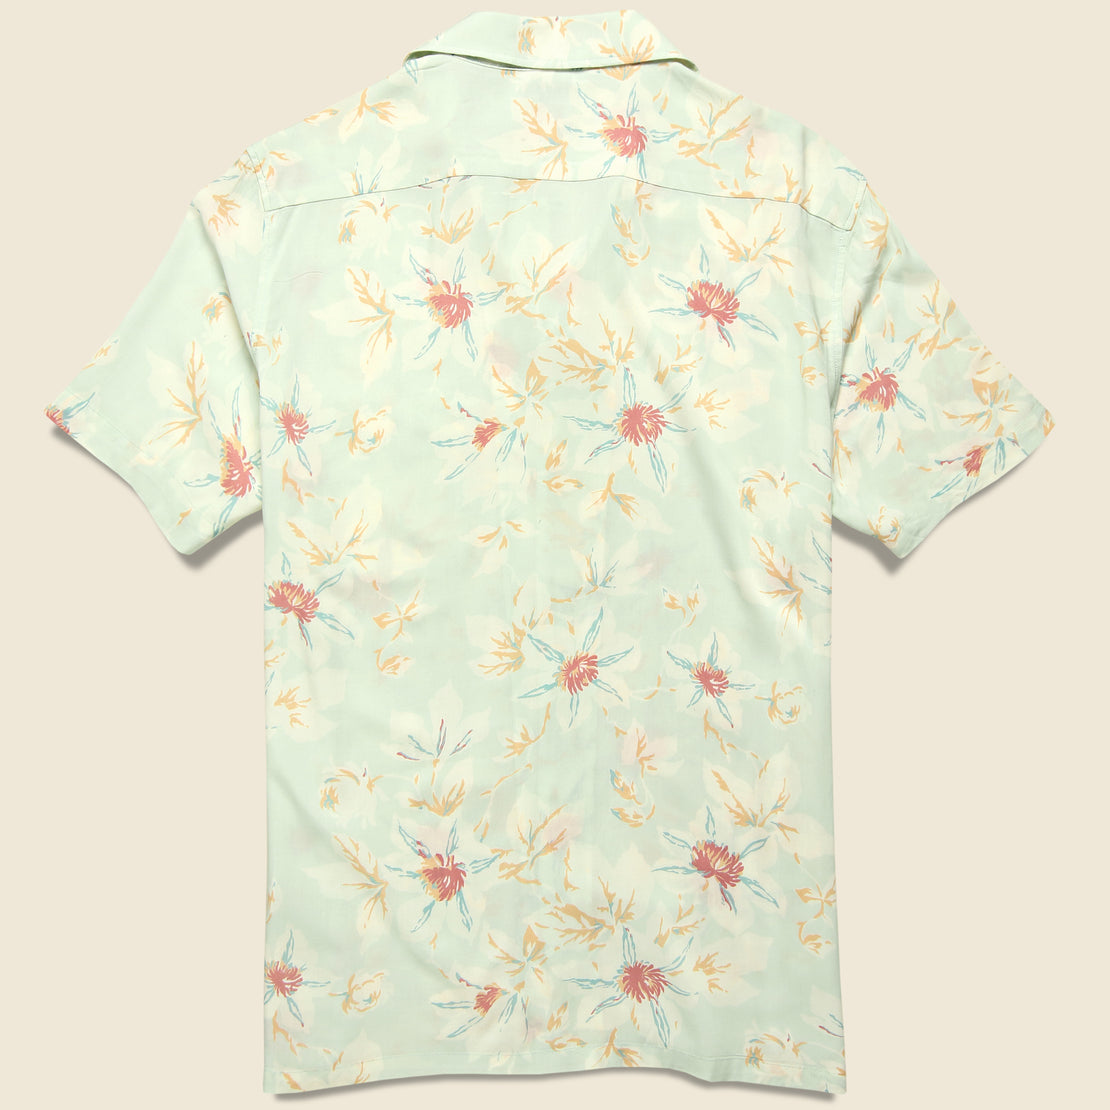 Kona Camp Shirt - Mint Floral